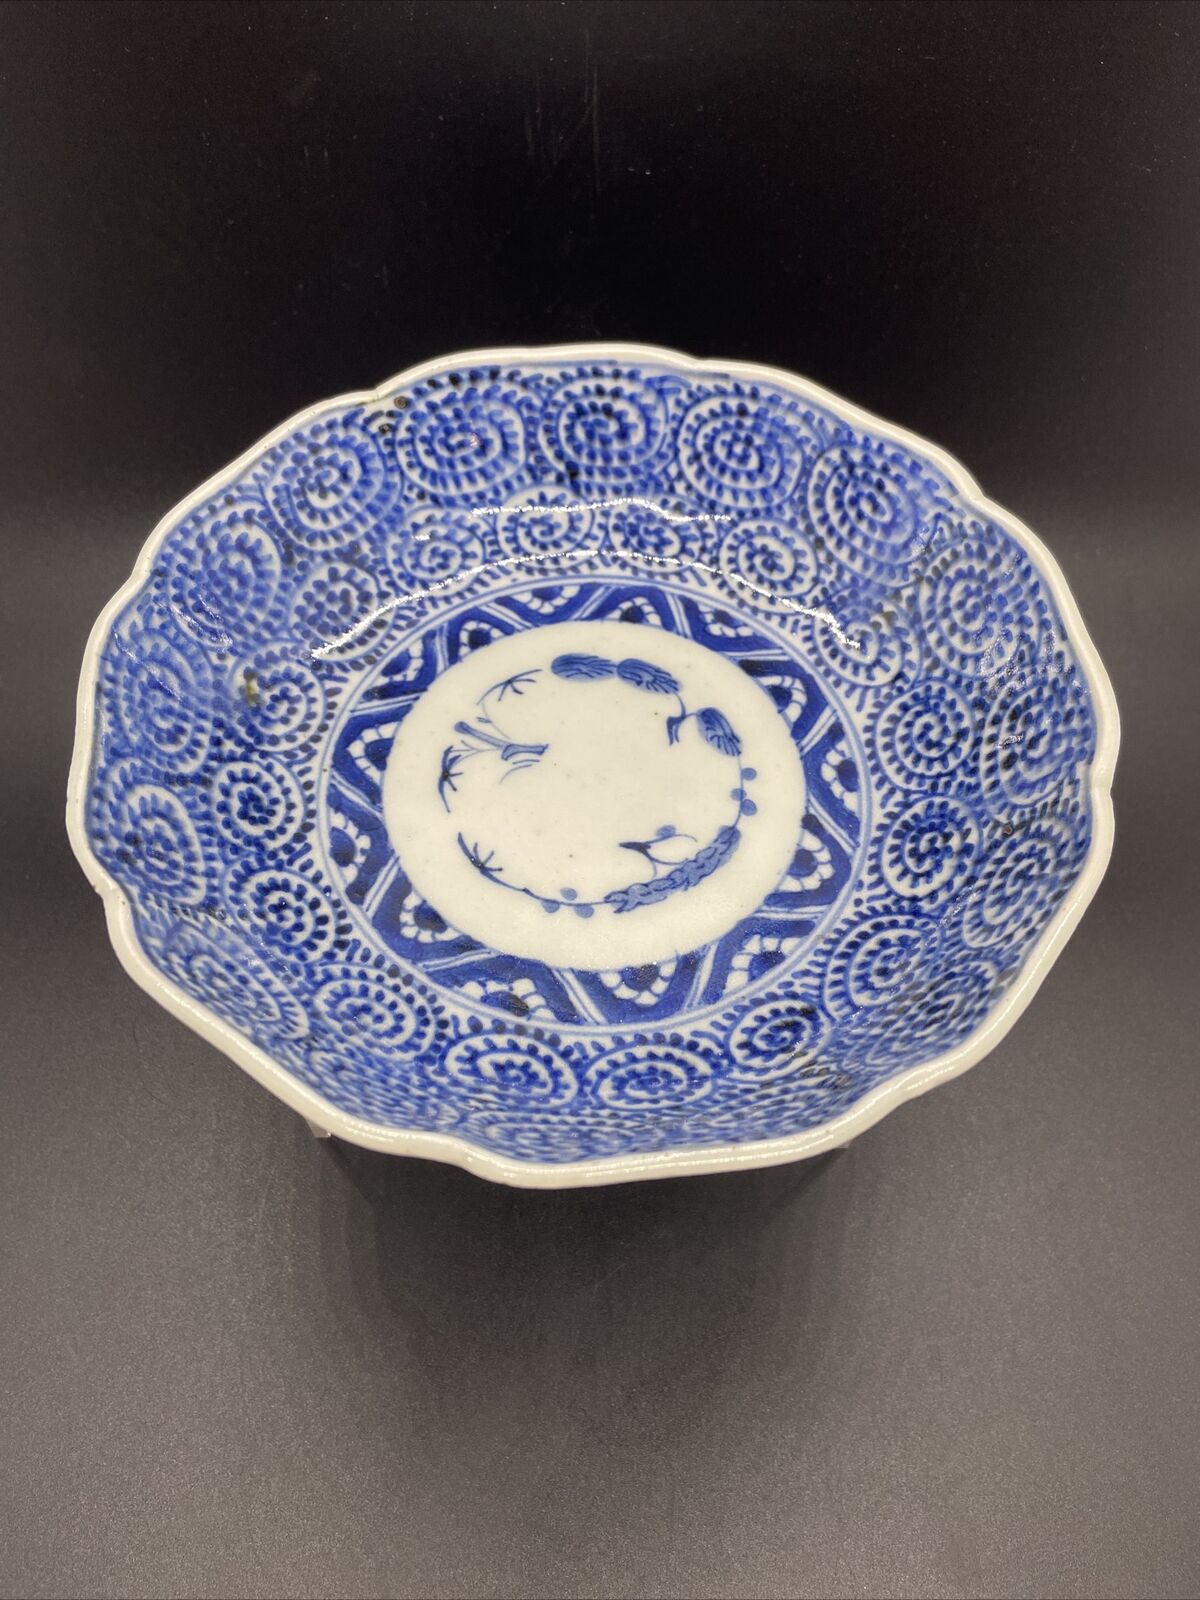 Antique Japanese Blue and White Porcelain Bowl 6” Dia X 1-7/8” High